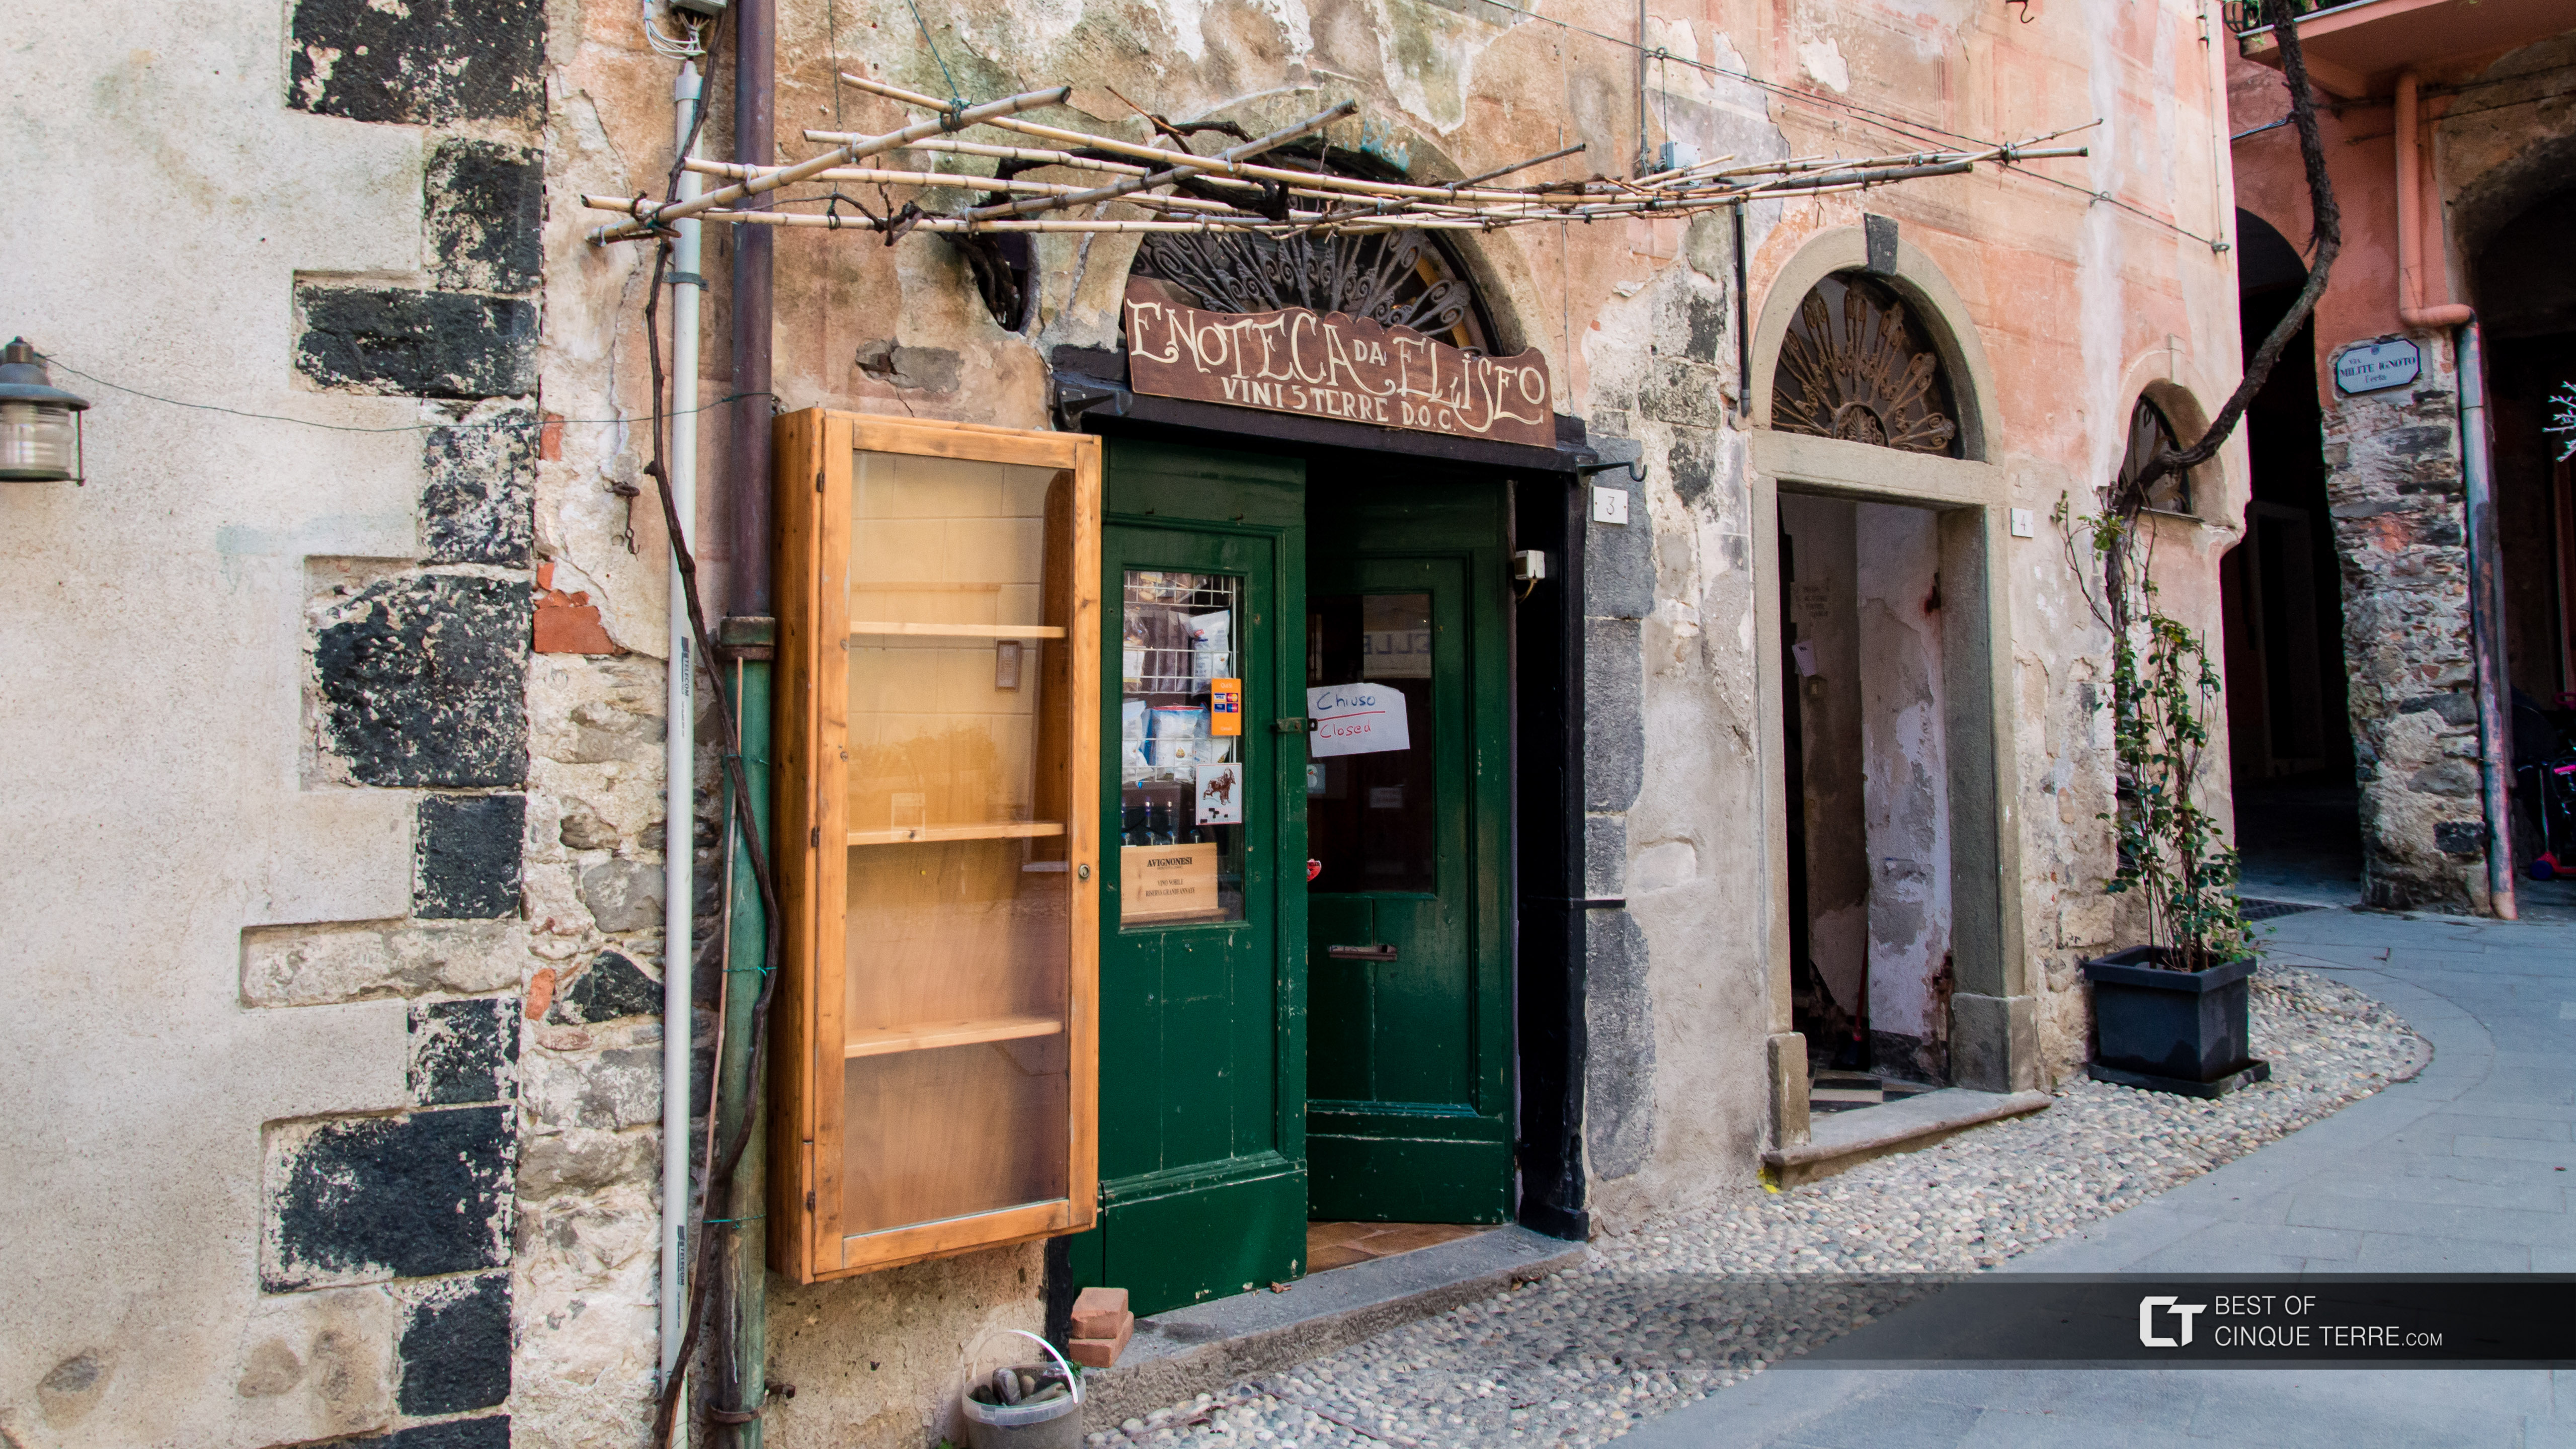 'Da Eliseo' Wine shop, Monterosso al Mare, Cinque Terre, Italy